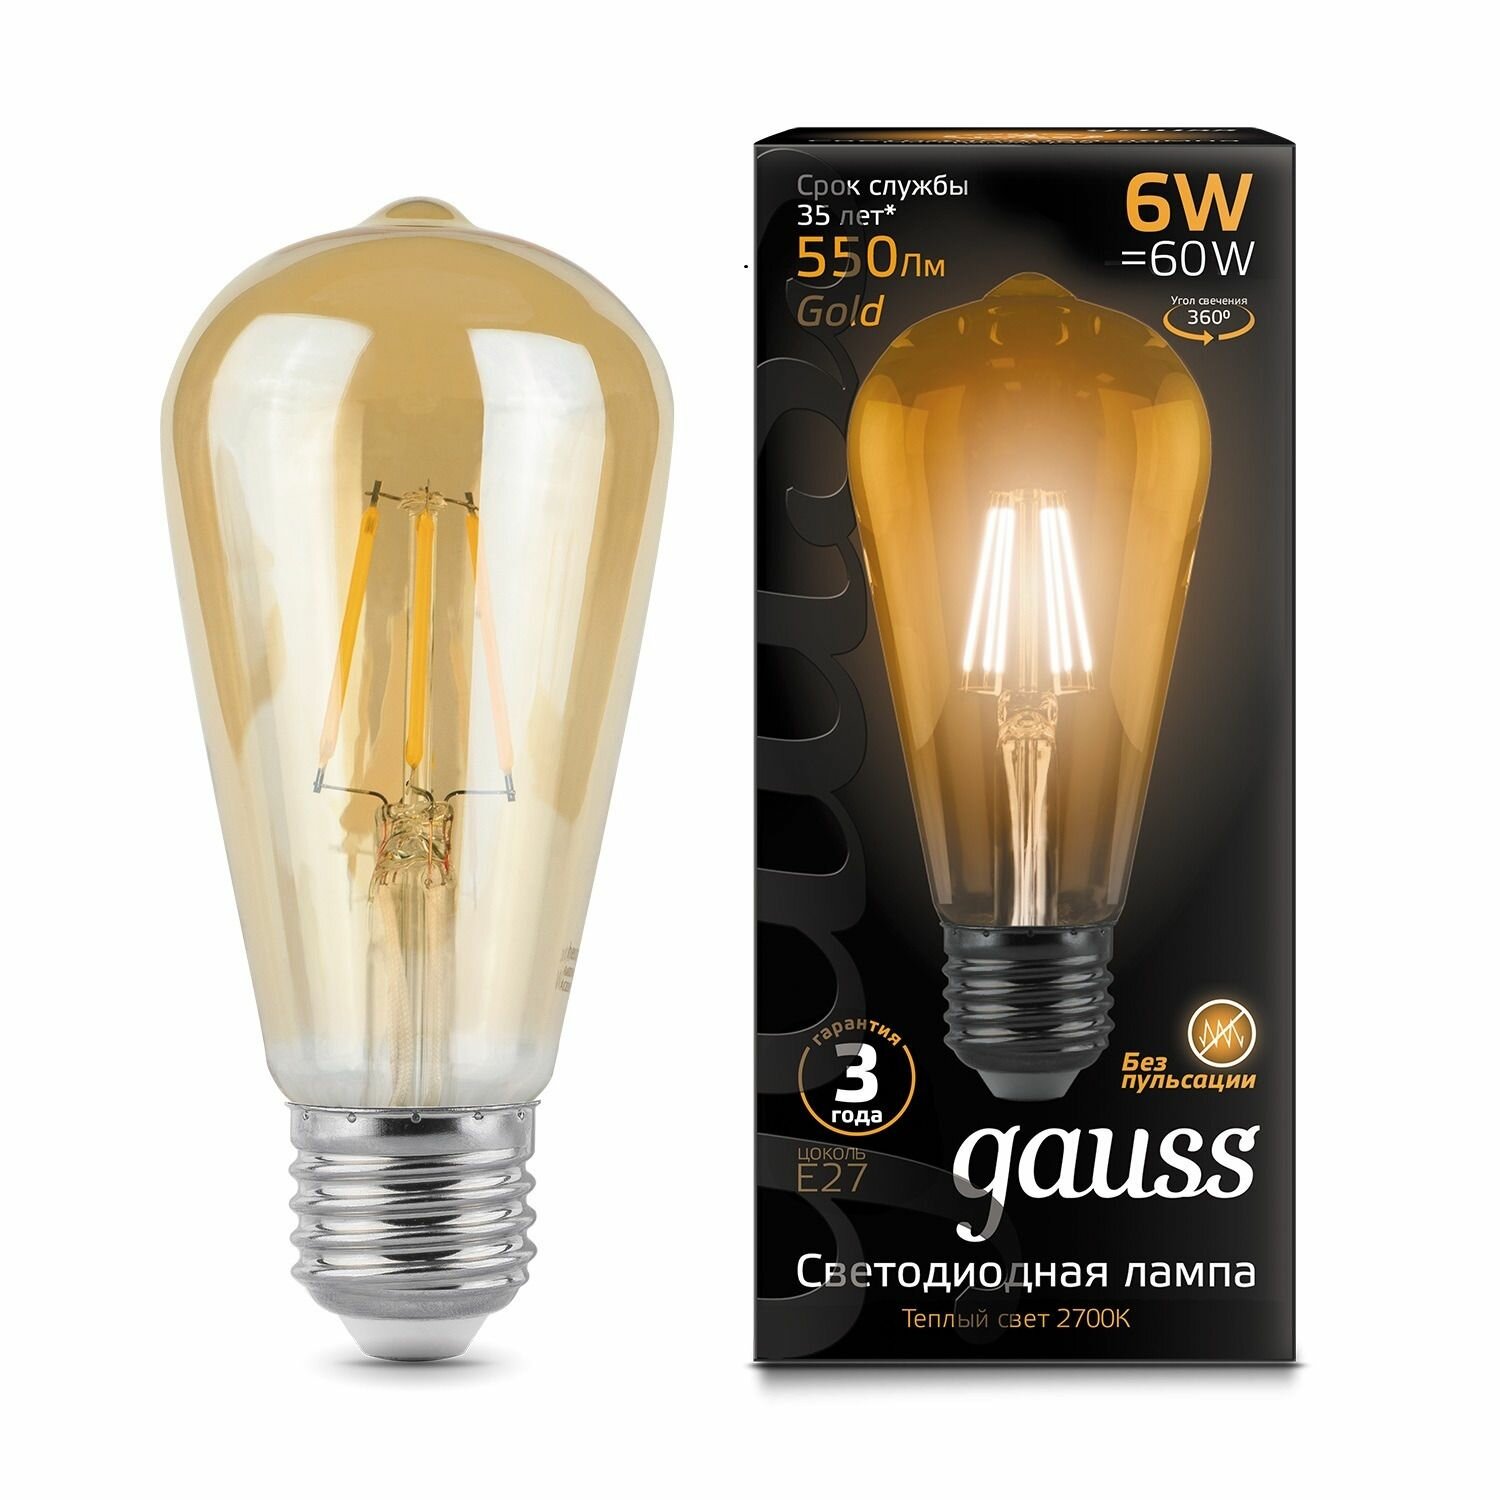 102802006 Лампа Gauss Filament ST64 6W 550lm 2400К E27 golden LED, уп.1шт